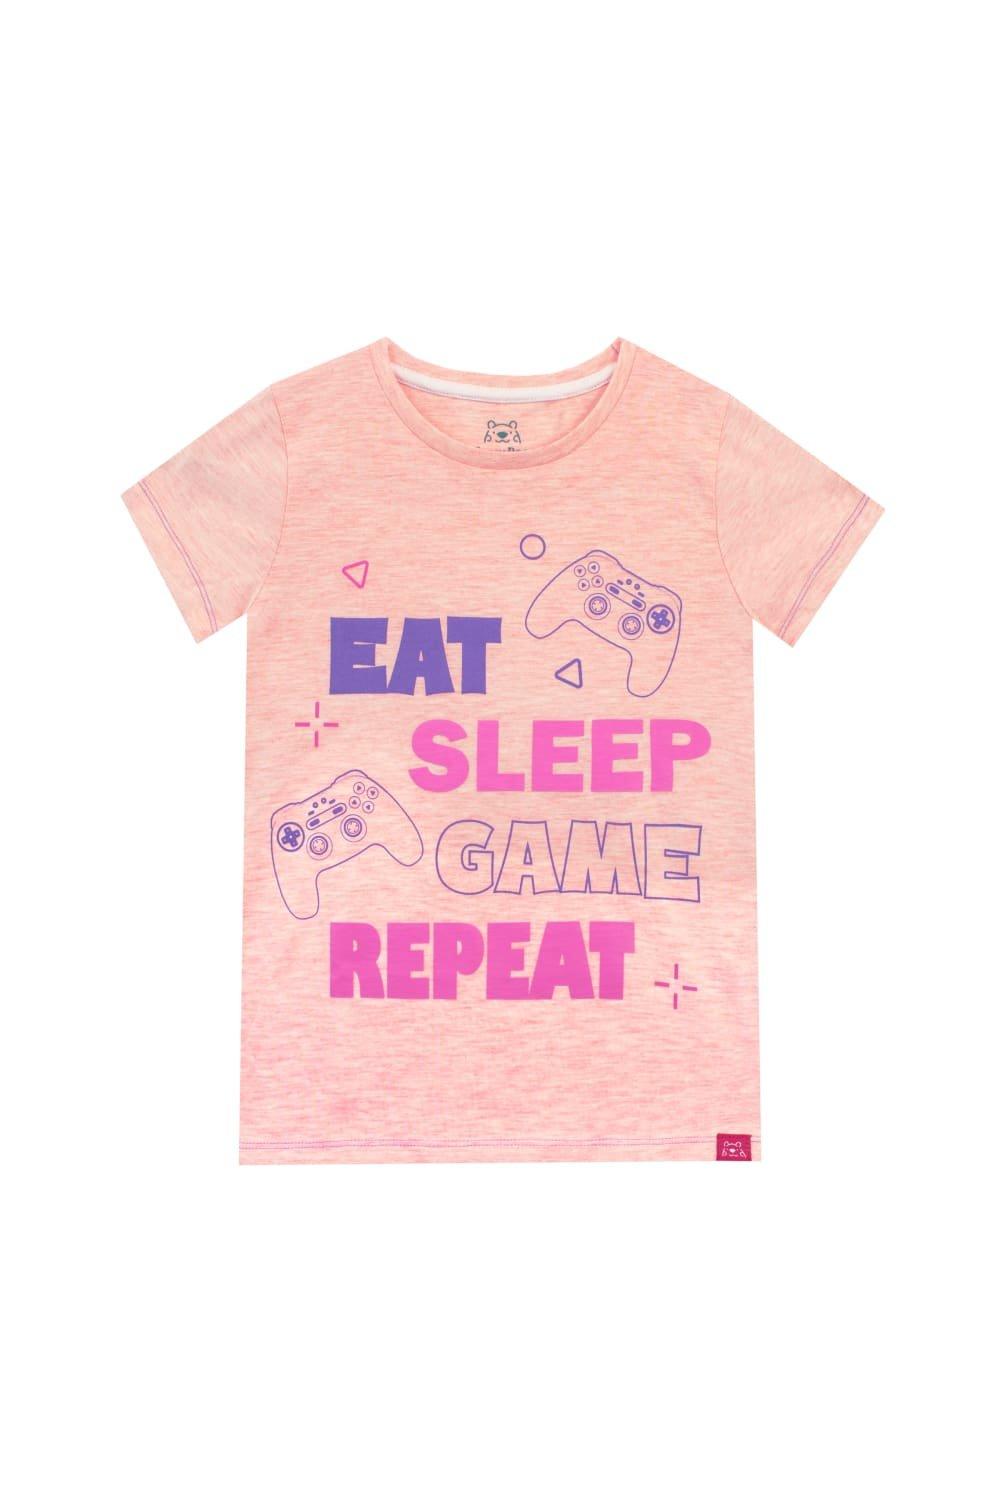 Eat Sleep Repeat Gaming T-Shirt